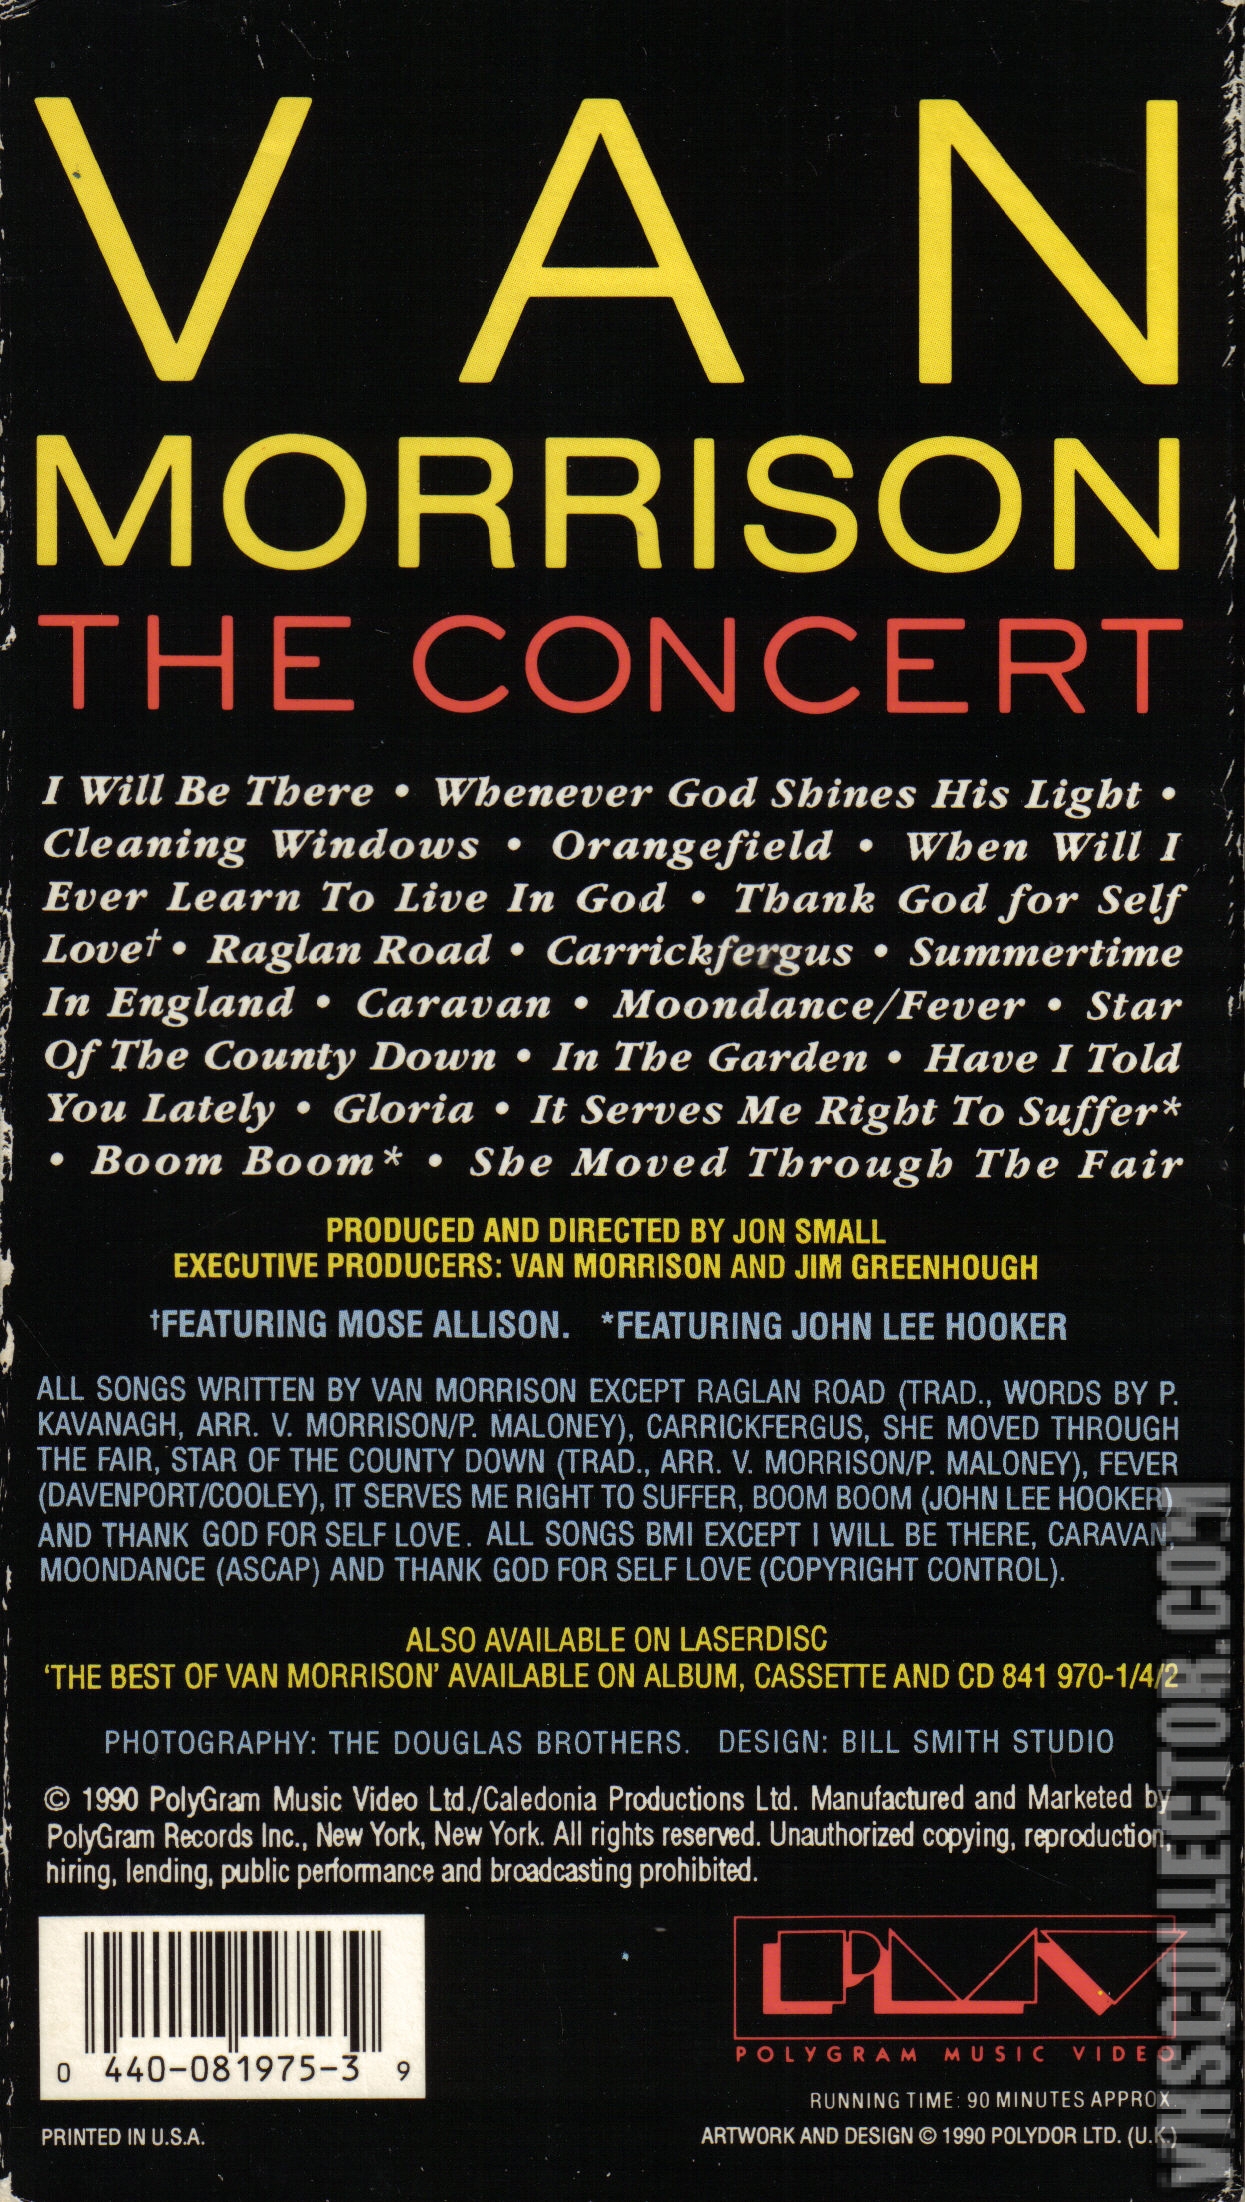 Van Morrison: The Concert | VHSCollector.com